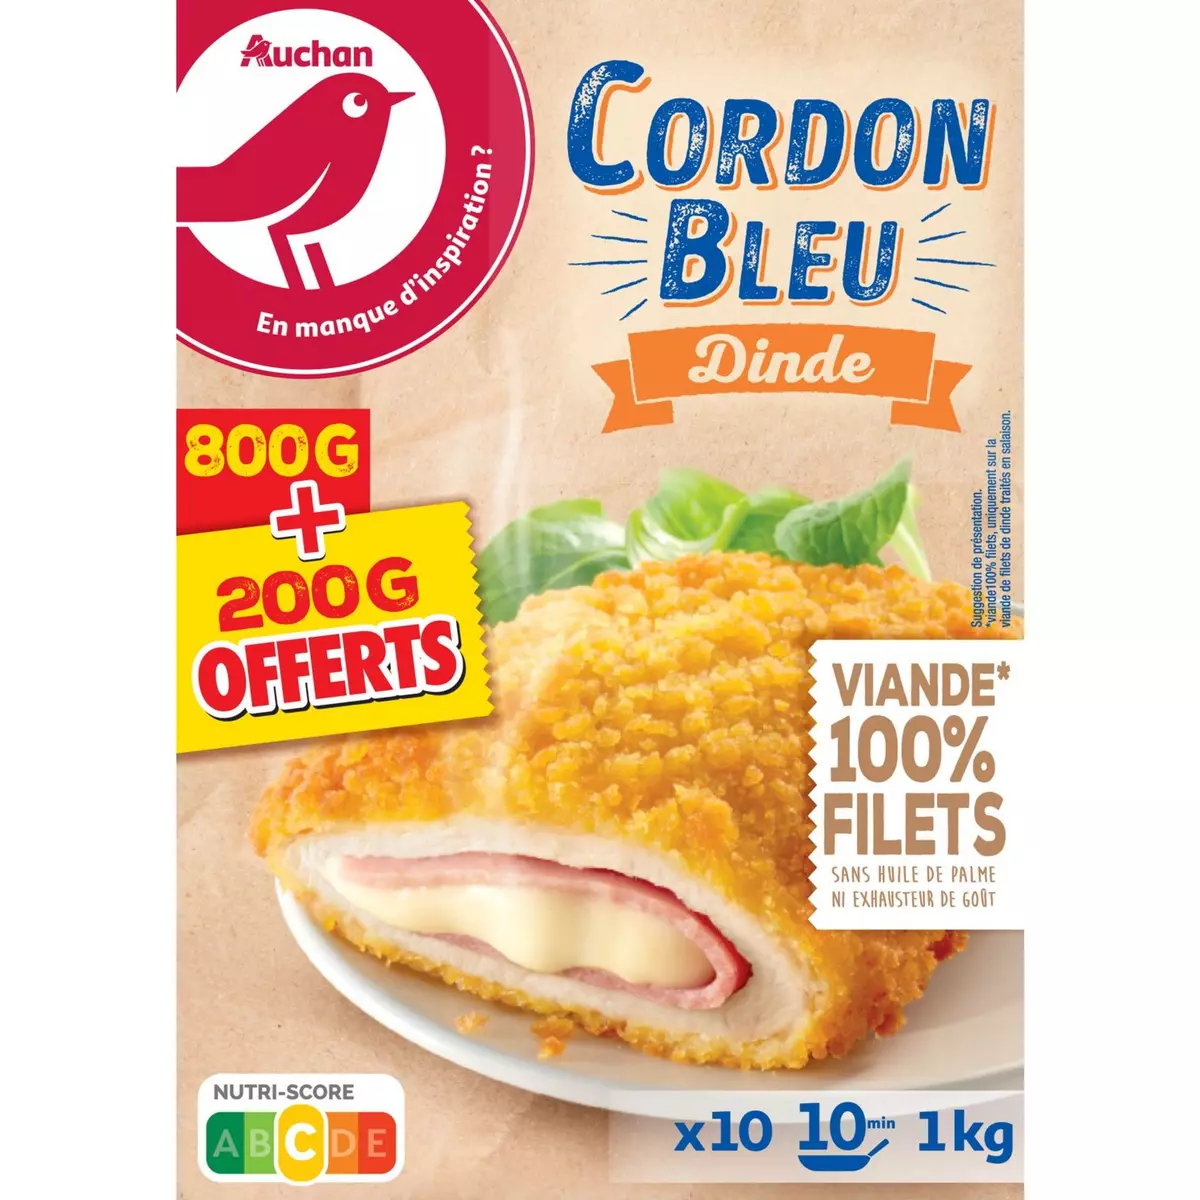 AUCHAN Cordon bleu de dinde 10 pièces 800g +200g offerts